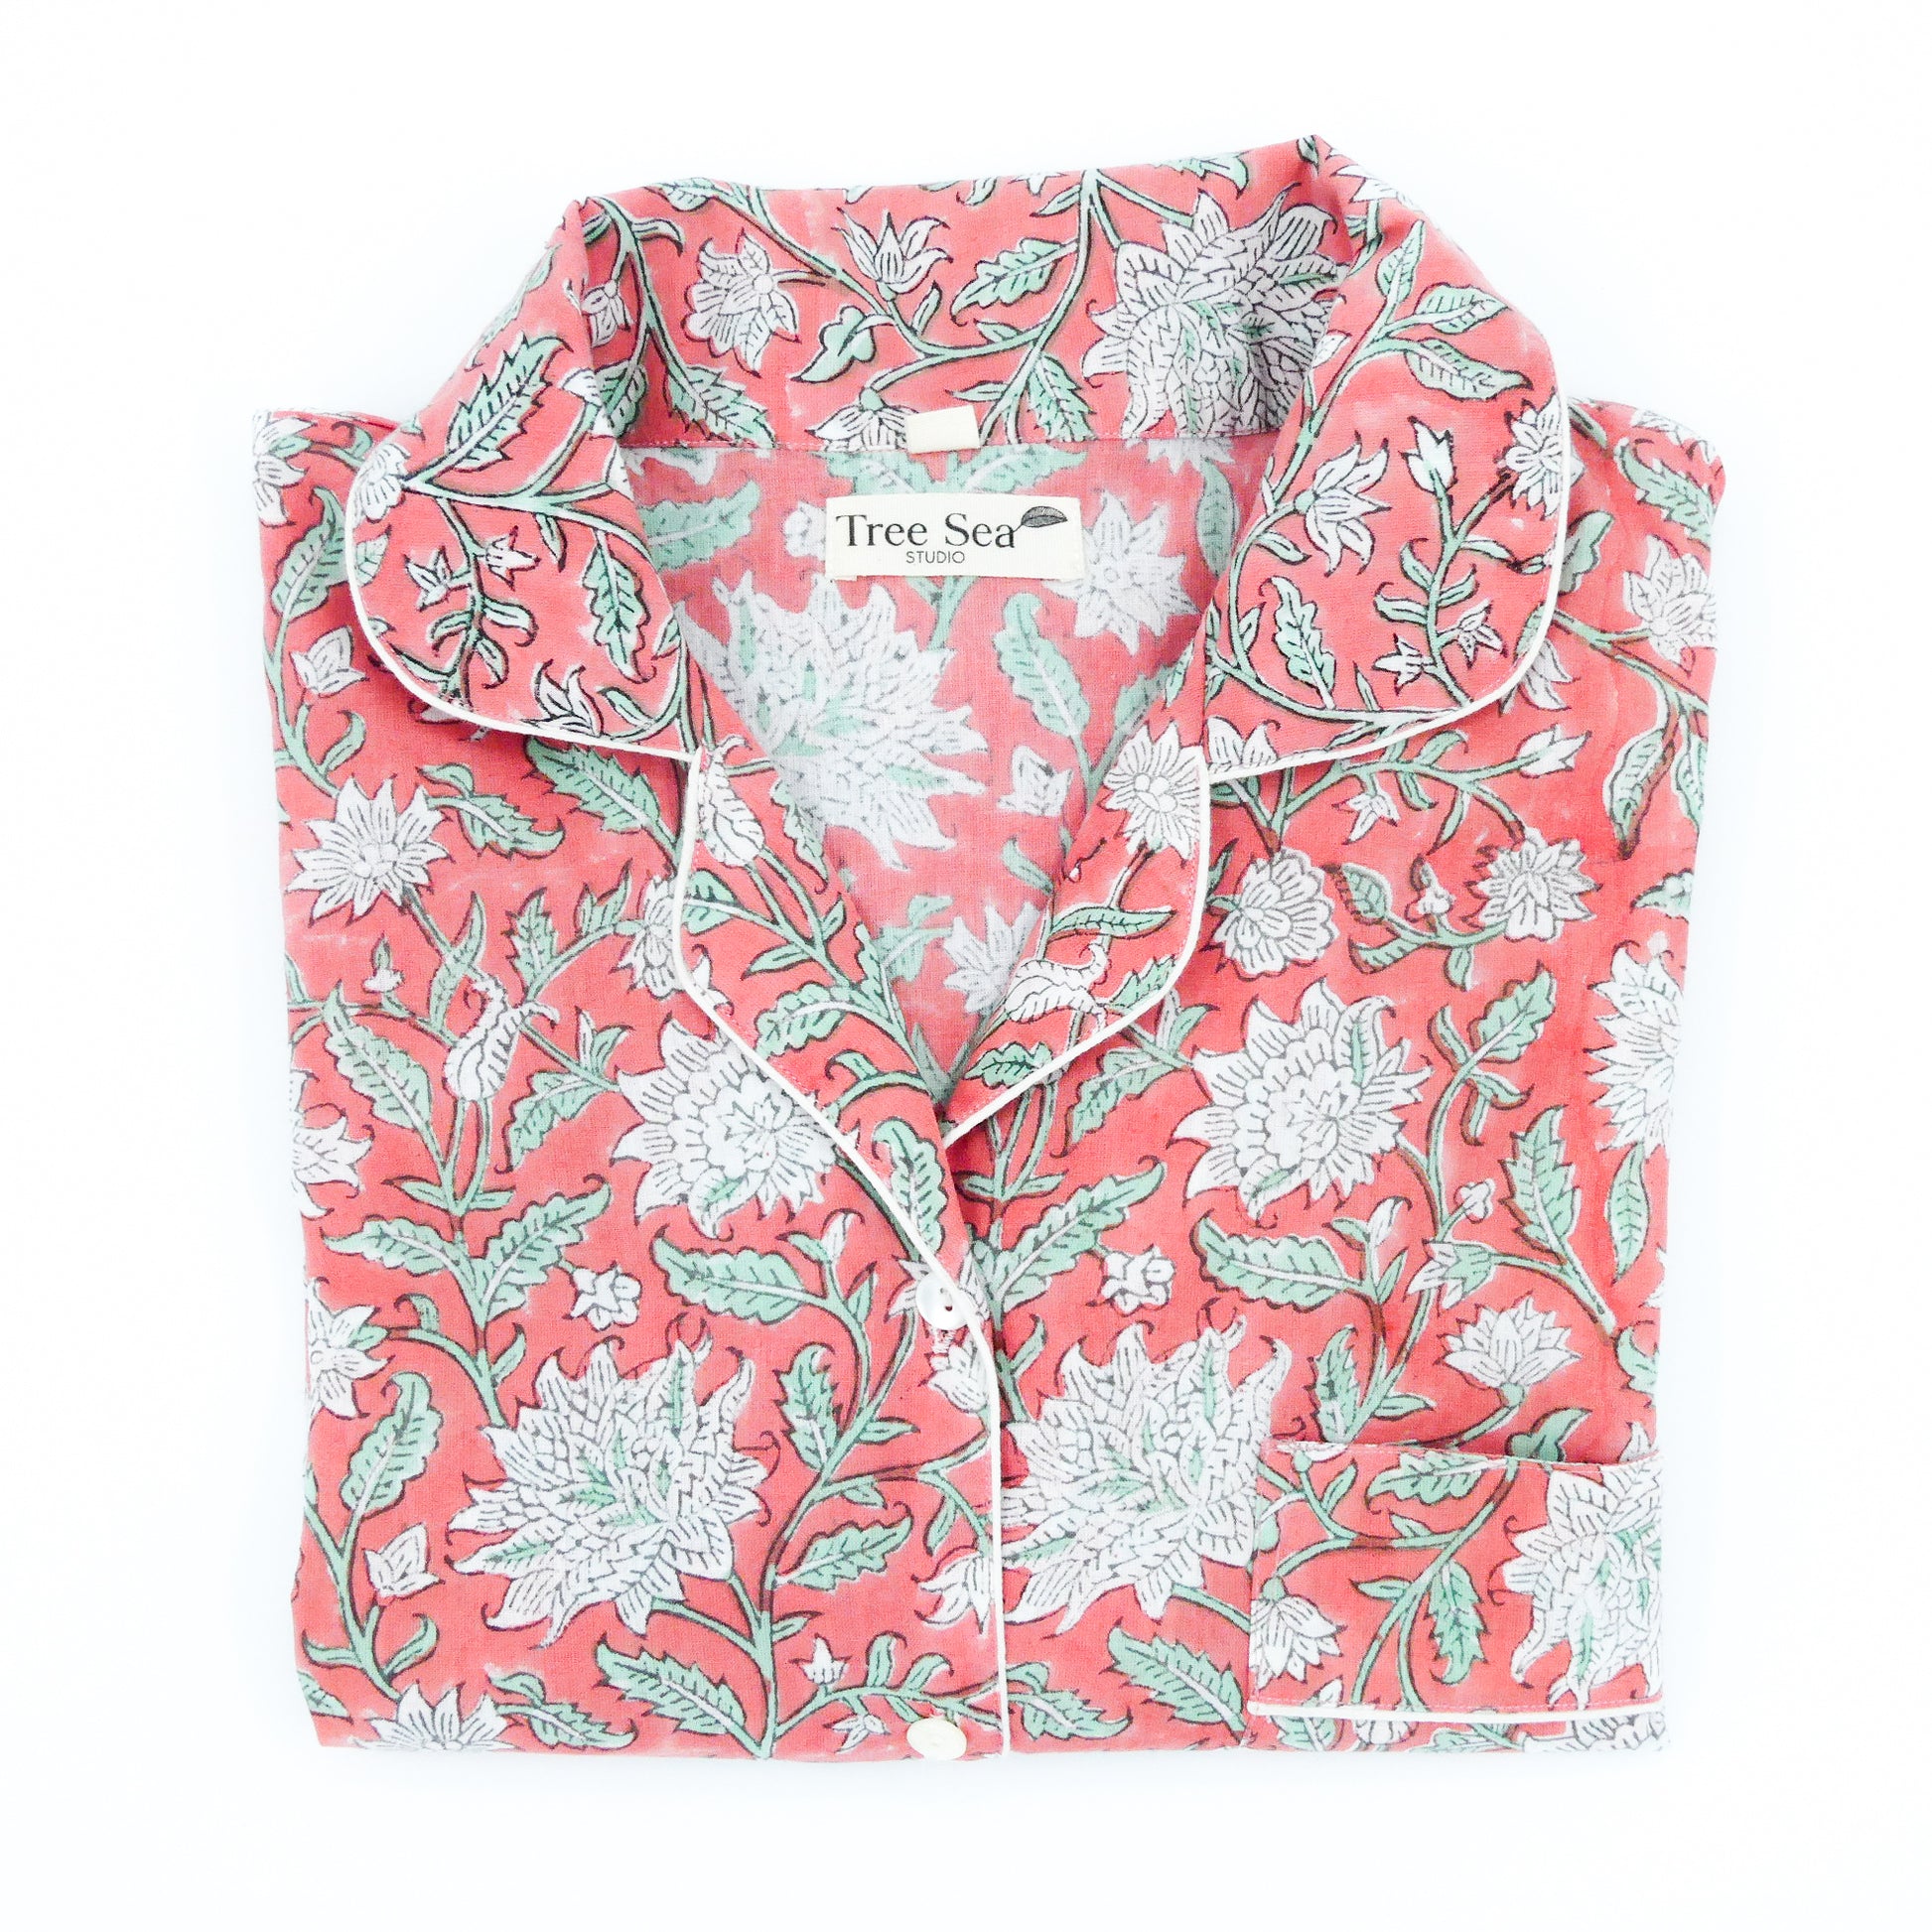 rose cotton pyjama top with floral design